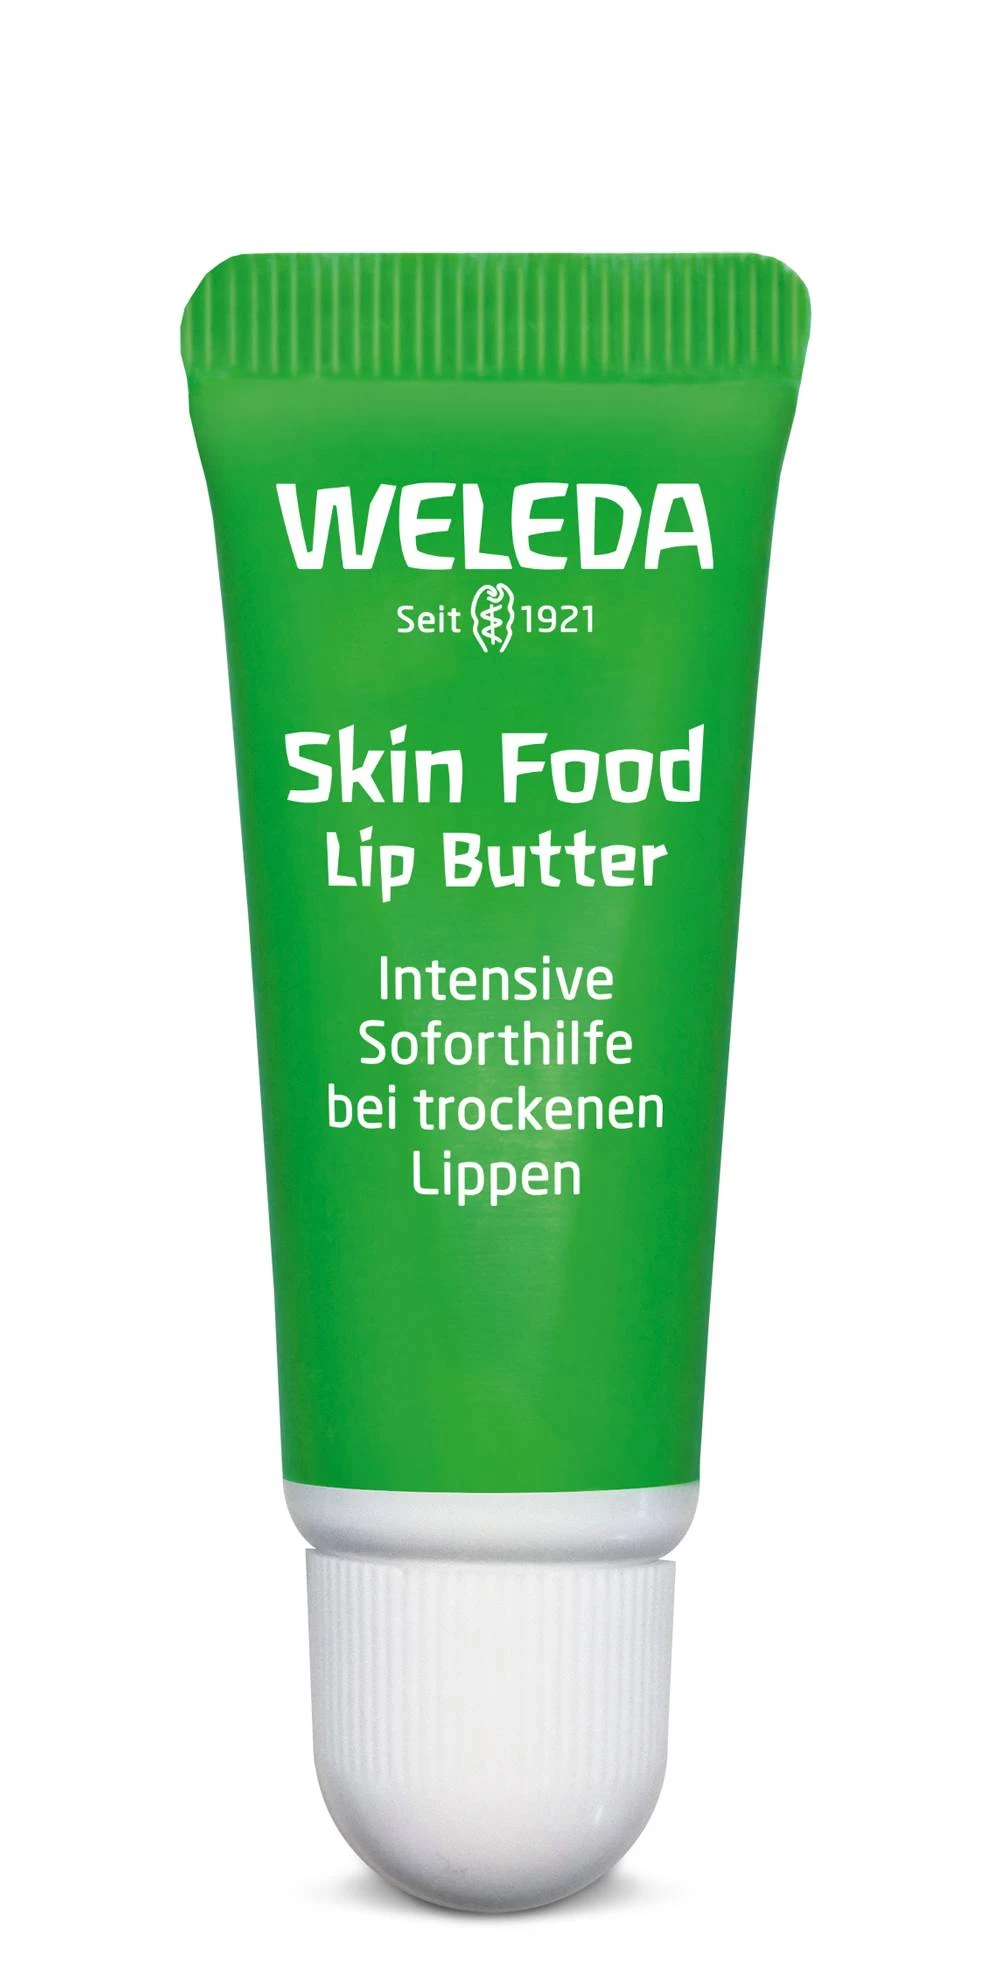 Skin food lip butter, 8ml - weleda